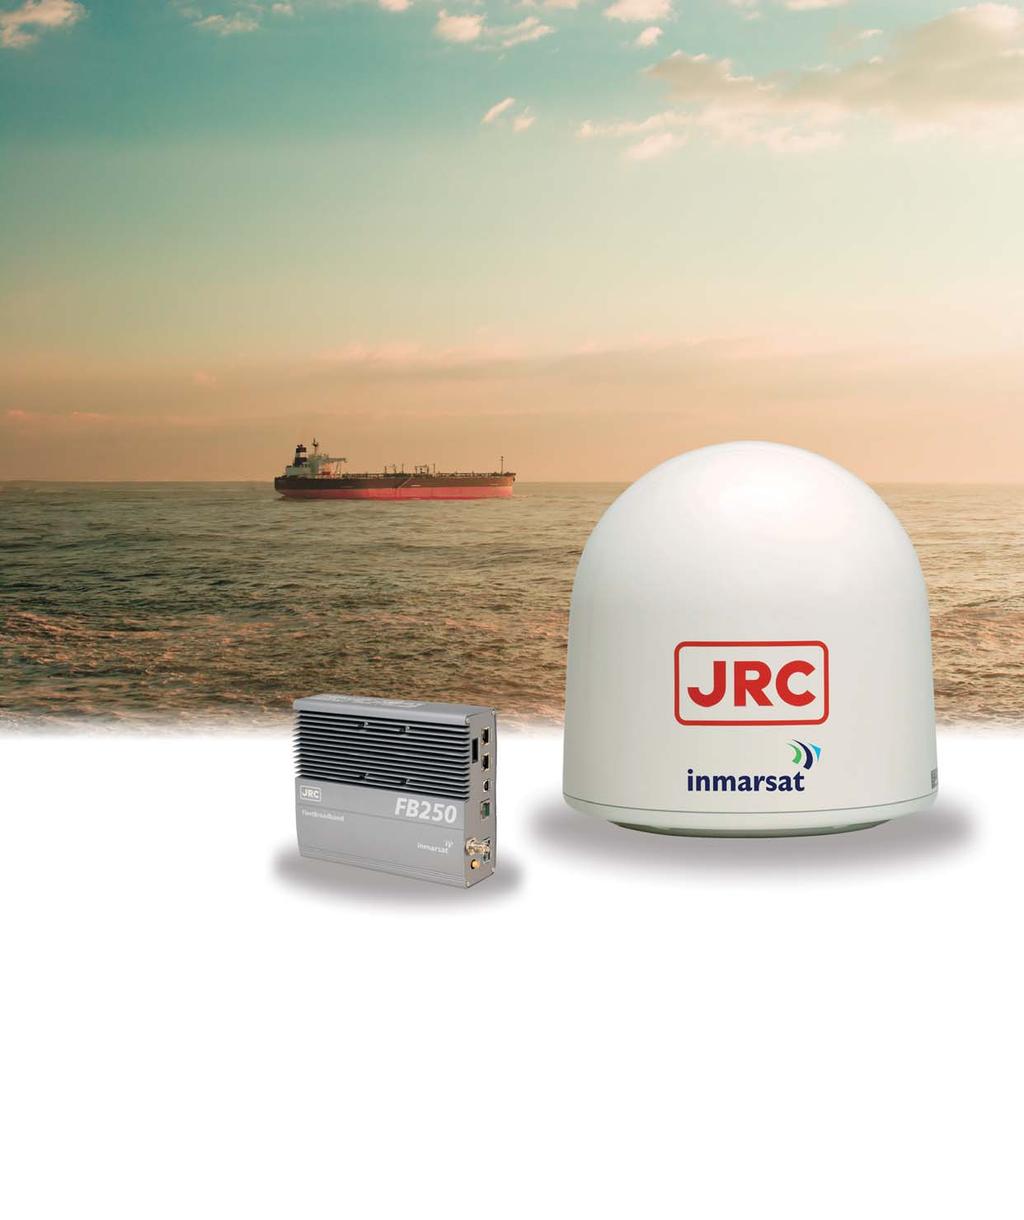 JUE-250 FleetBroadband introducing pioneering solutions for the next-generation FleetBroadband communication service Upgrade path from JRC Fleet 33